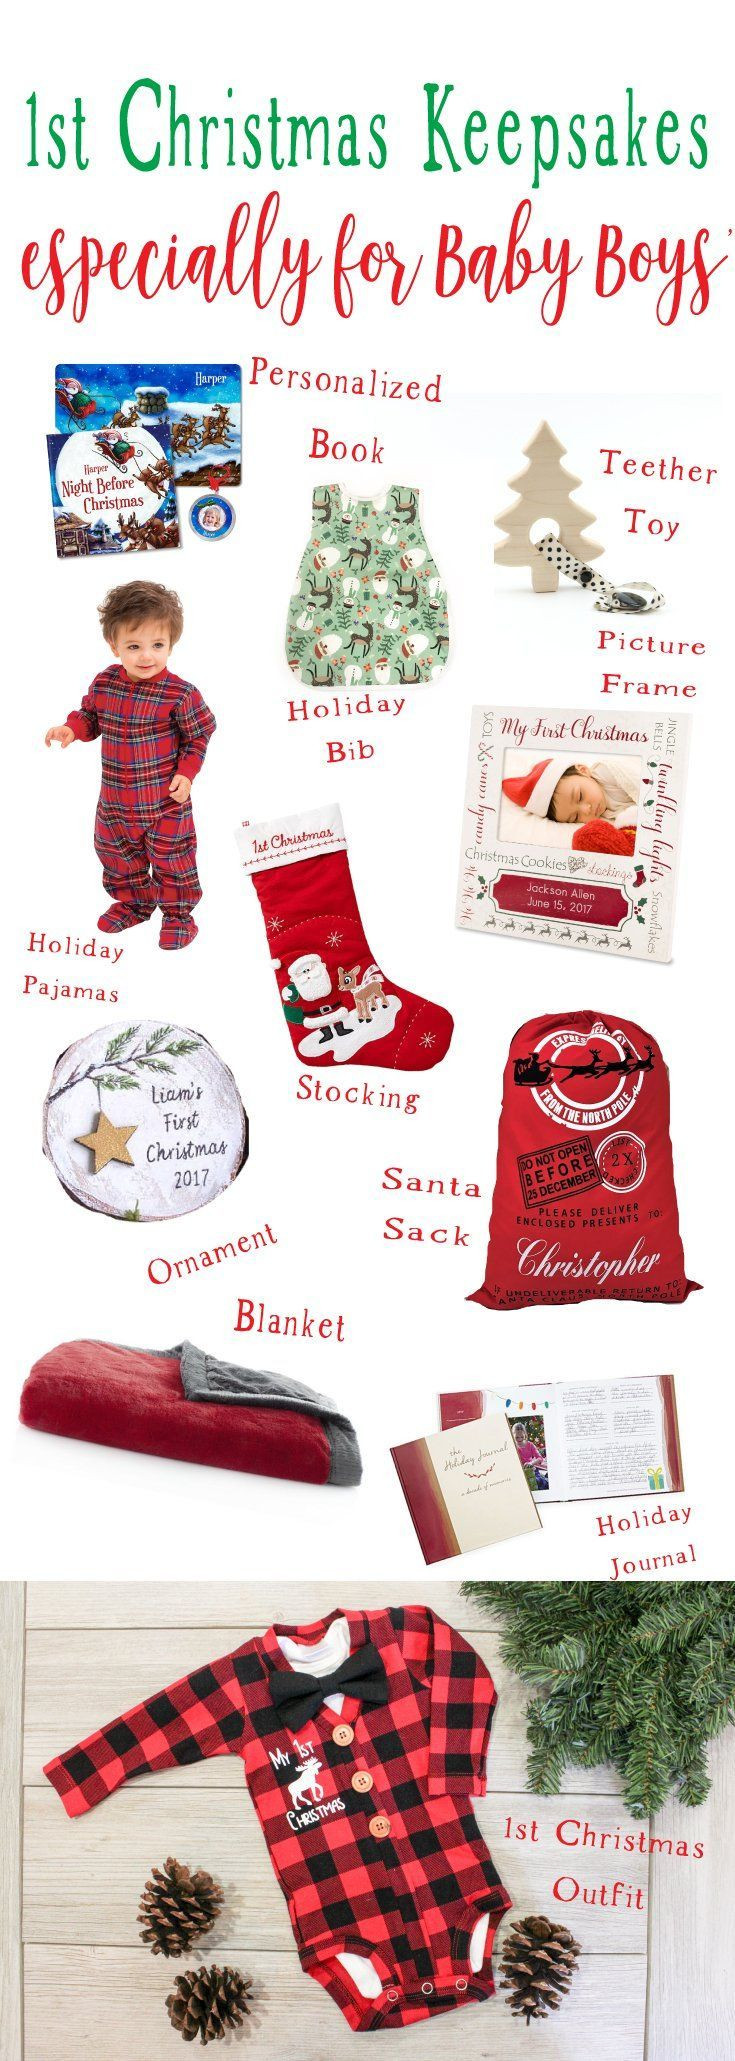 Baby Boy First Christmas Gift Ideas
 Baby Boy 1st Christmas Keepsake Ideas Christmas